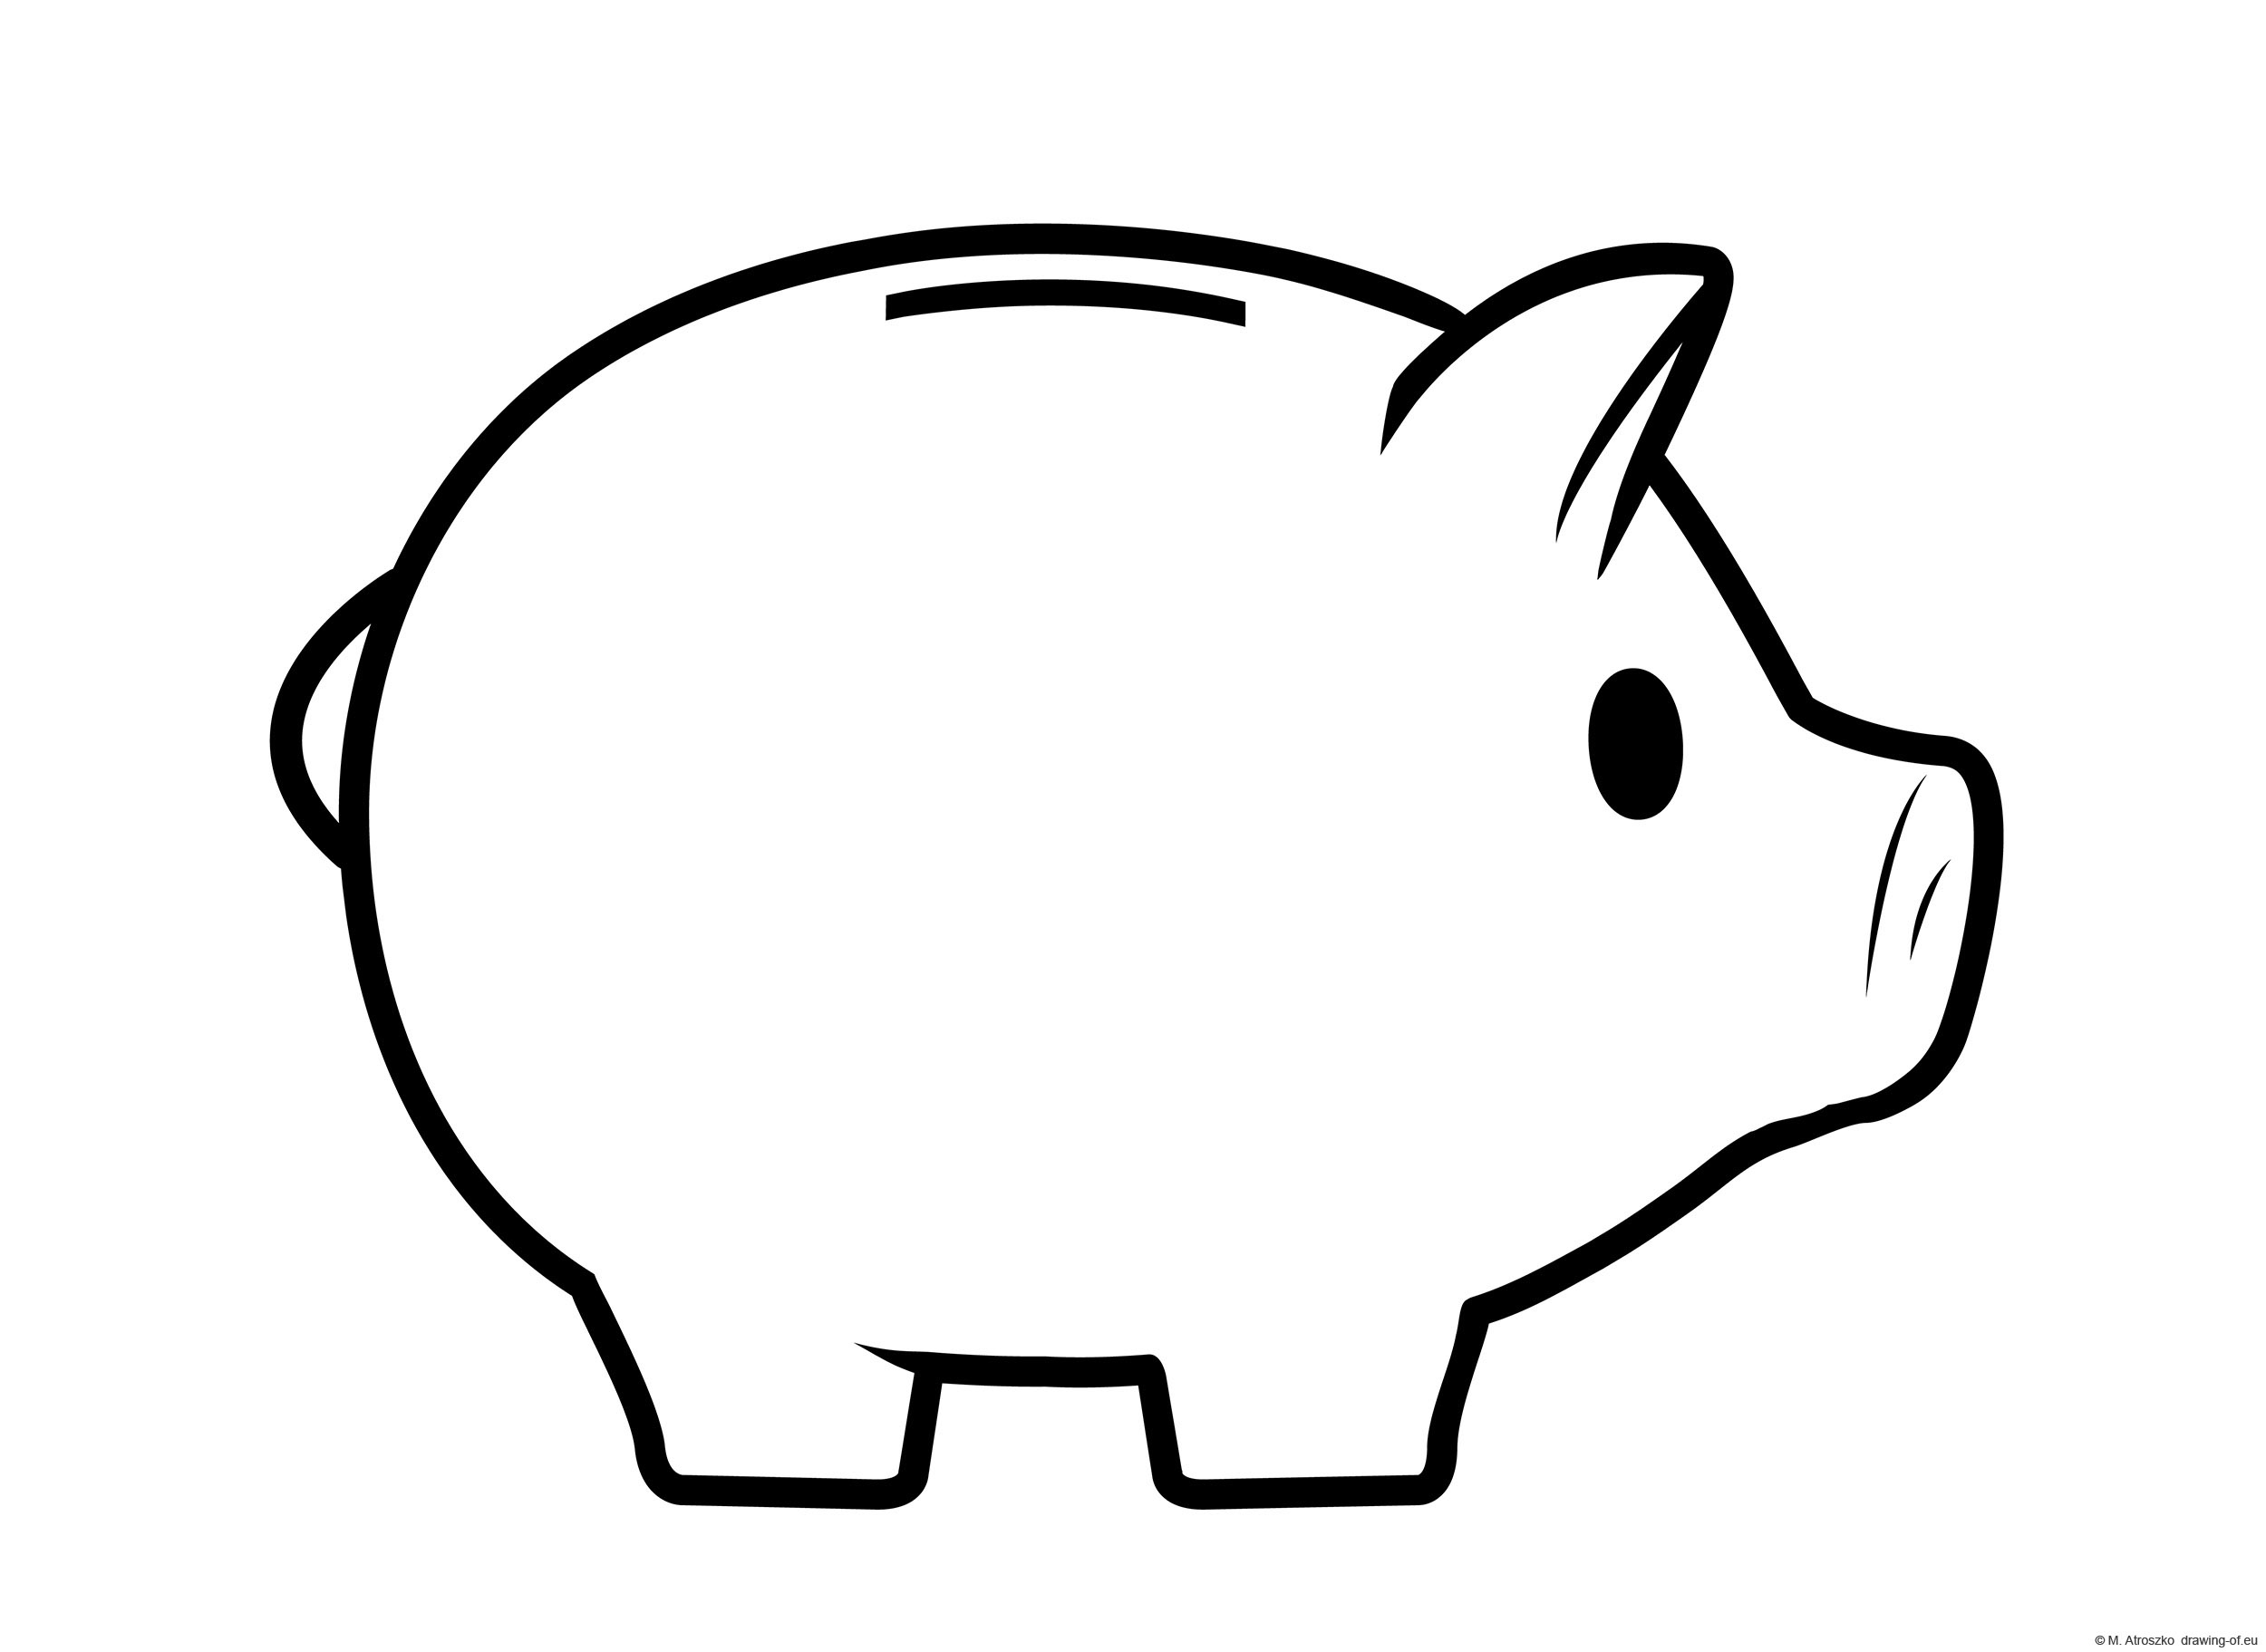 Piggy bank illustration